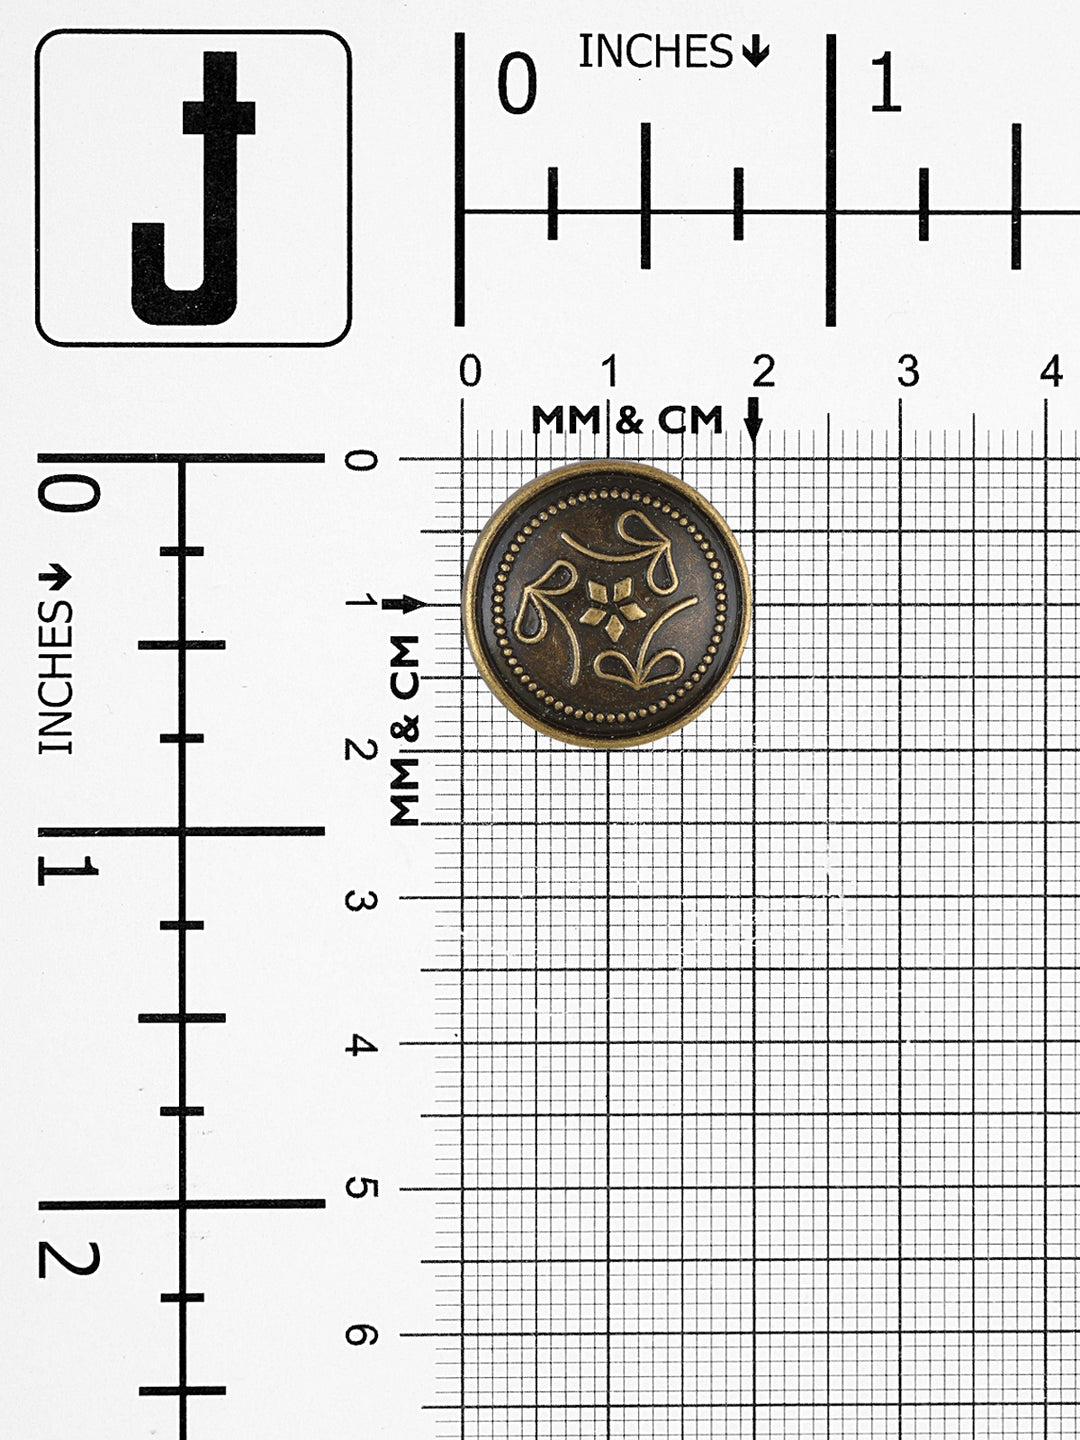 Antique Brass Ancient Design Ethnic Button